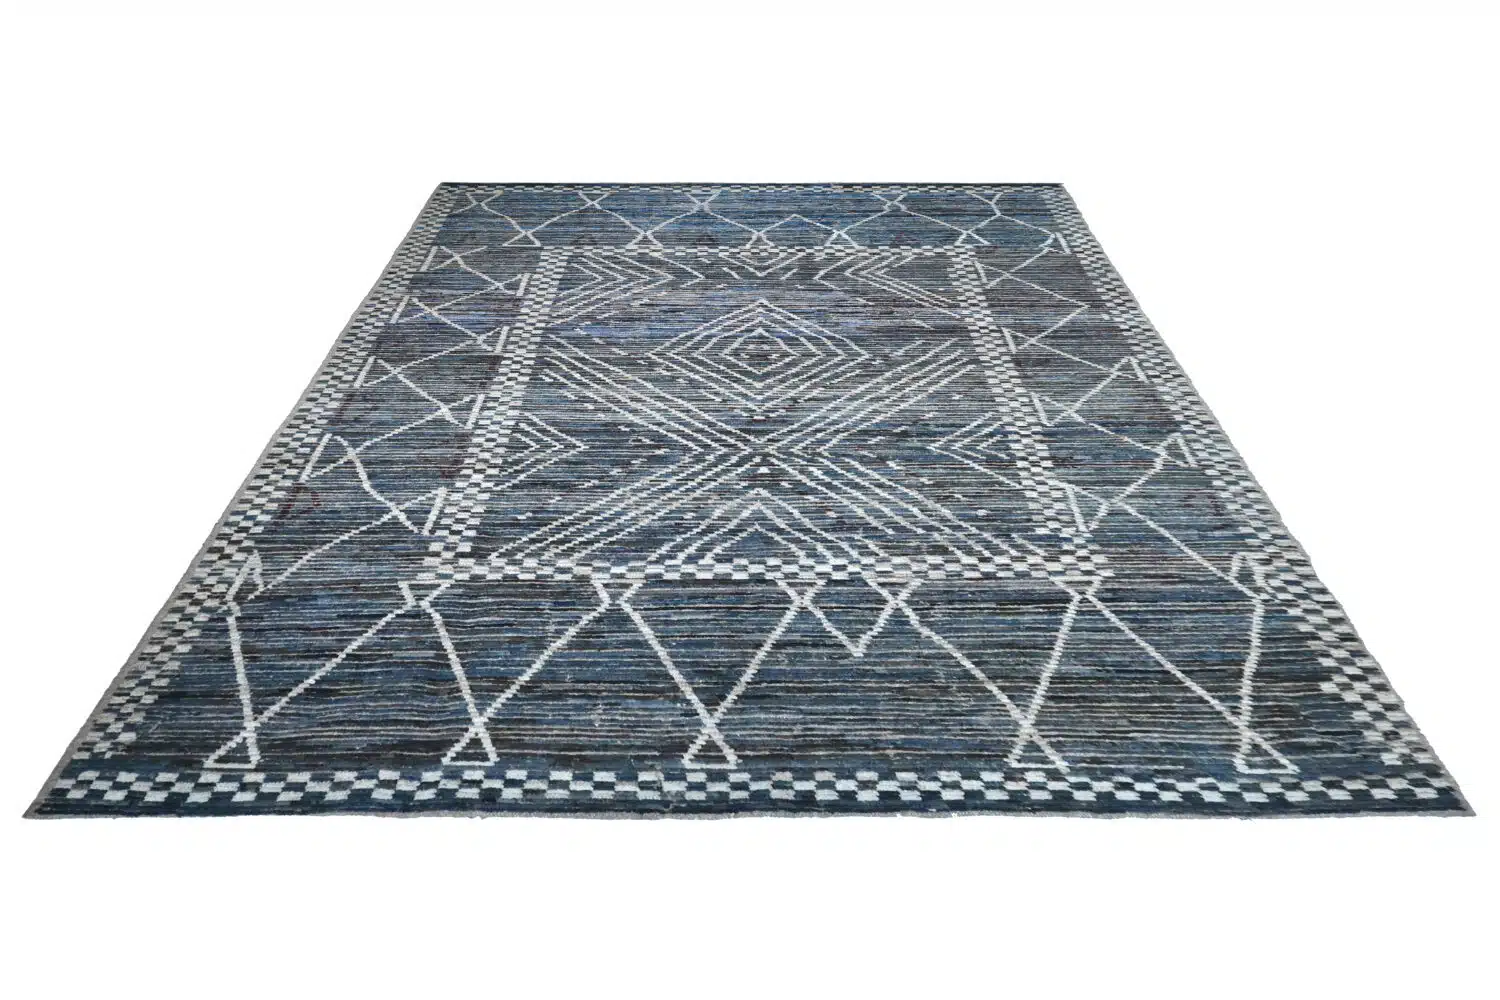 Moroccan 6' 3" x 8' 10" Handmade Area Rug